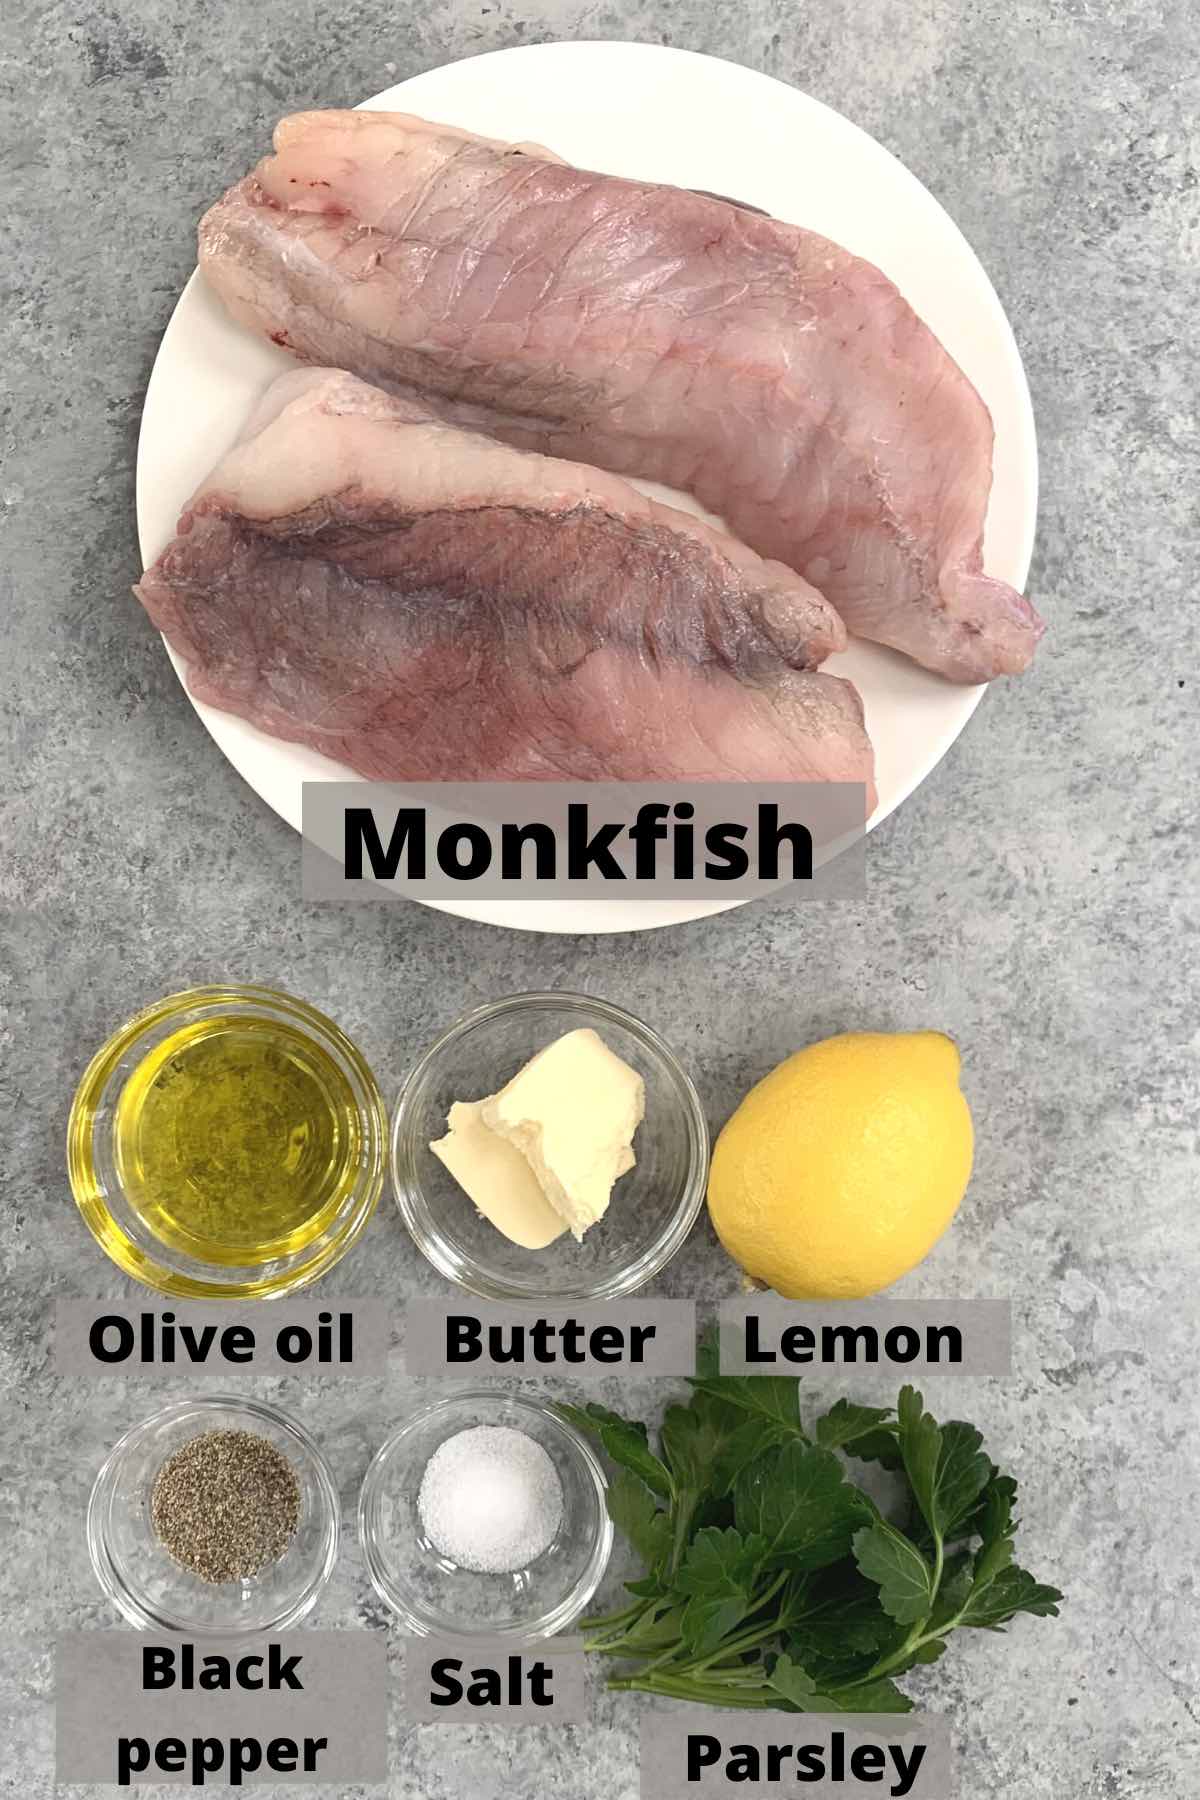 Ingredients for cooking monkfish